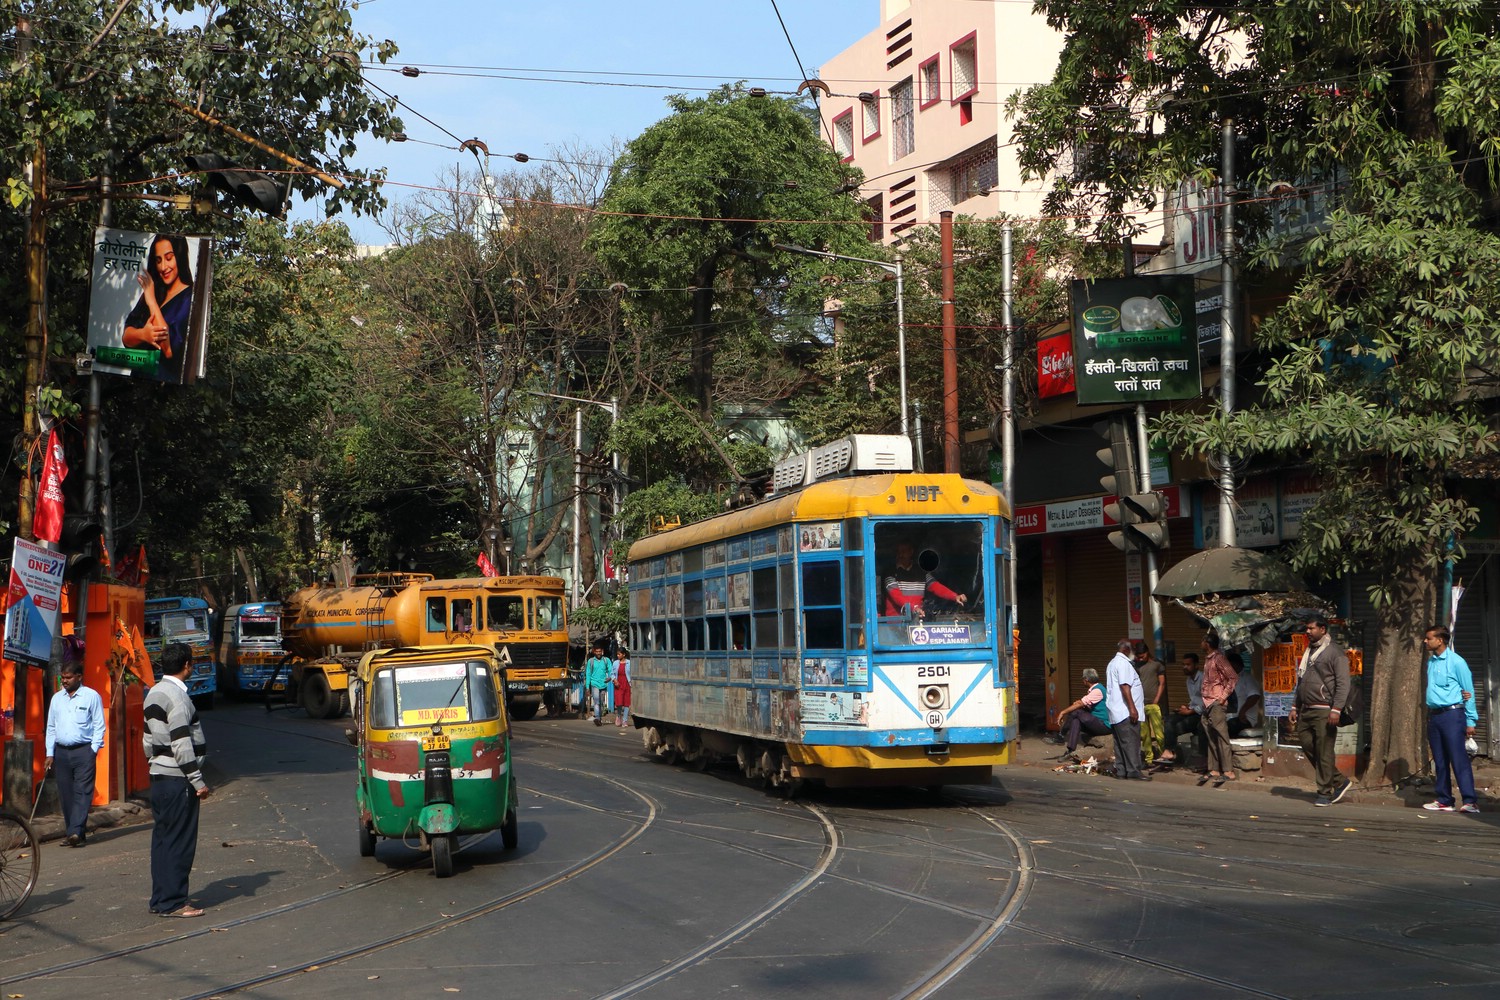 Kolkata, 4-axle motor car # 250-1 (২৫০-১)